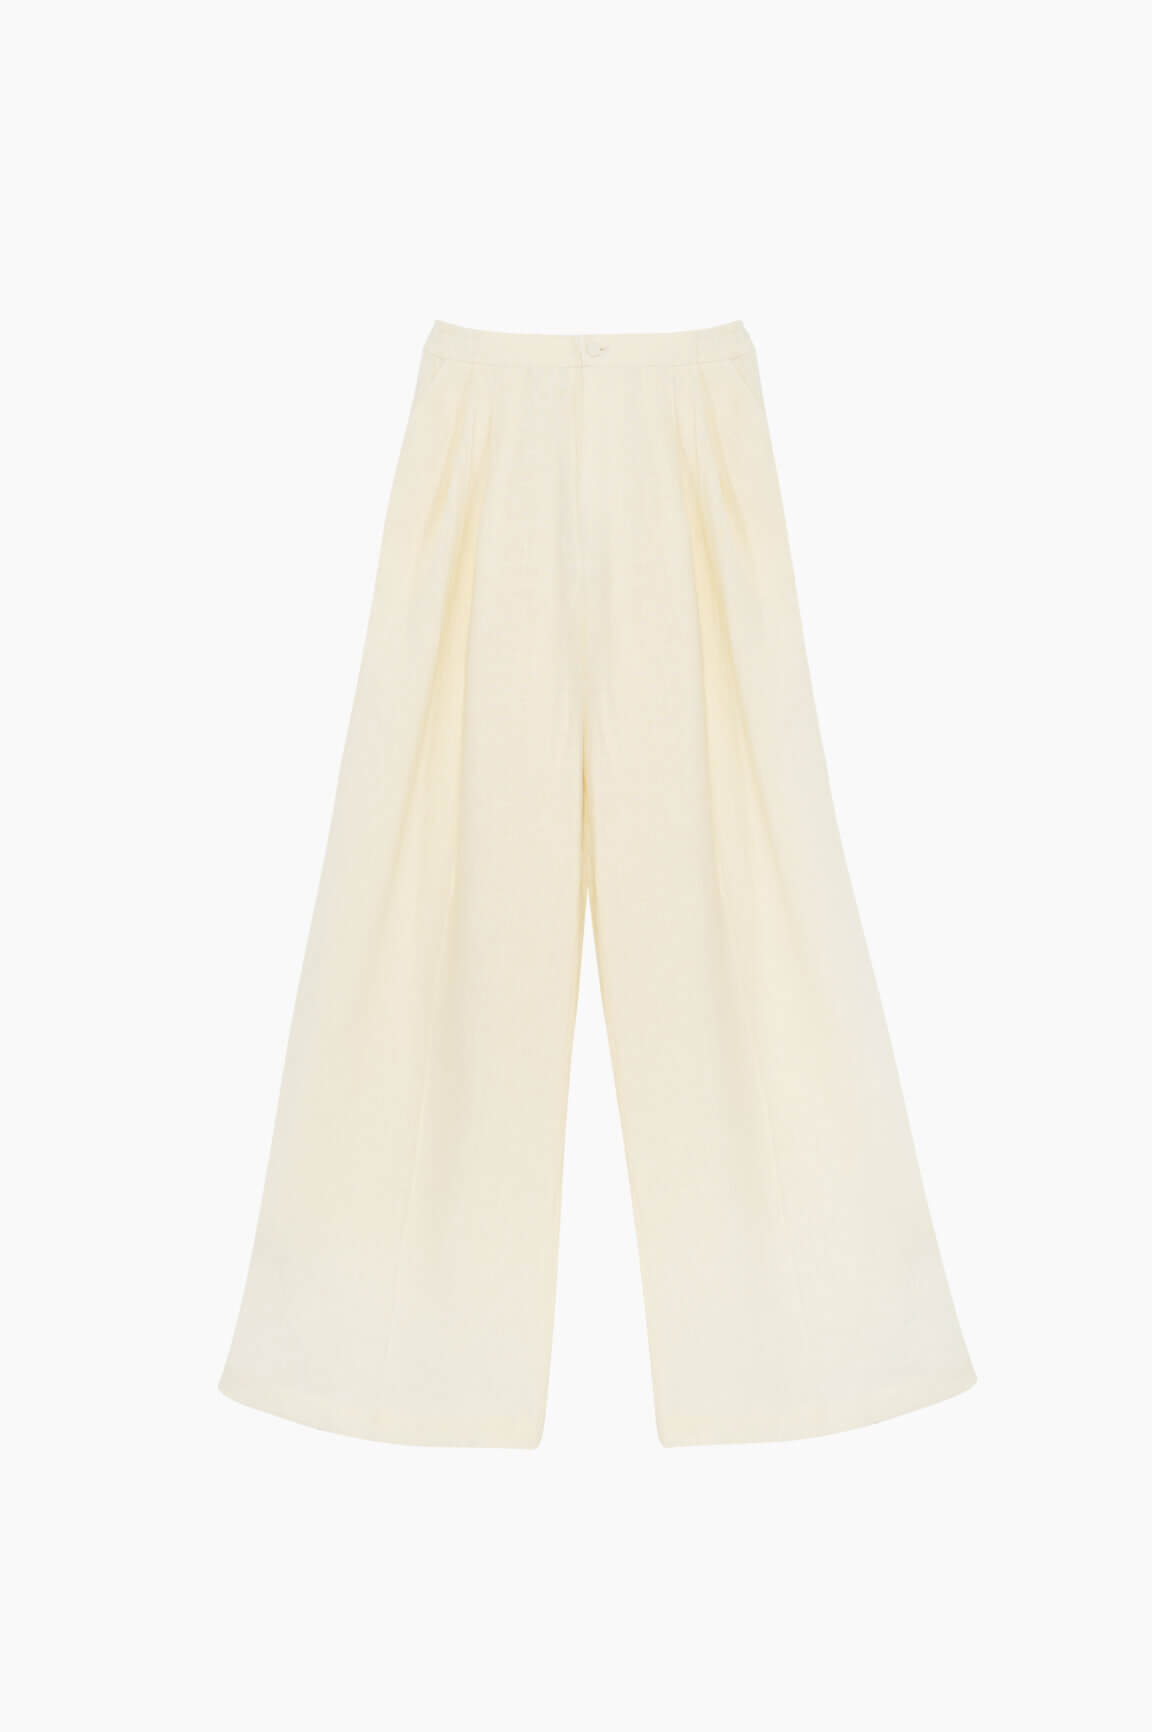 Dynasty off white linen pants | Women's trousers by Sleeper